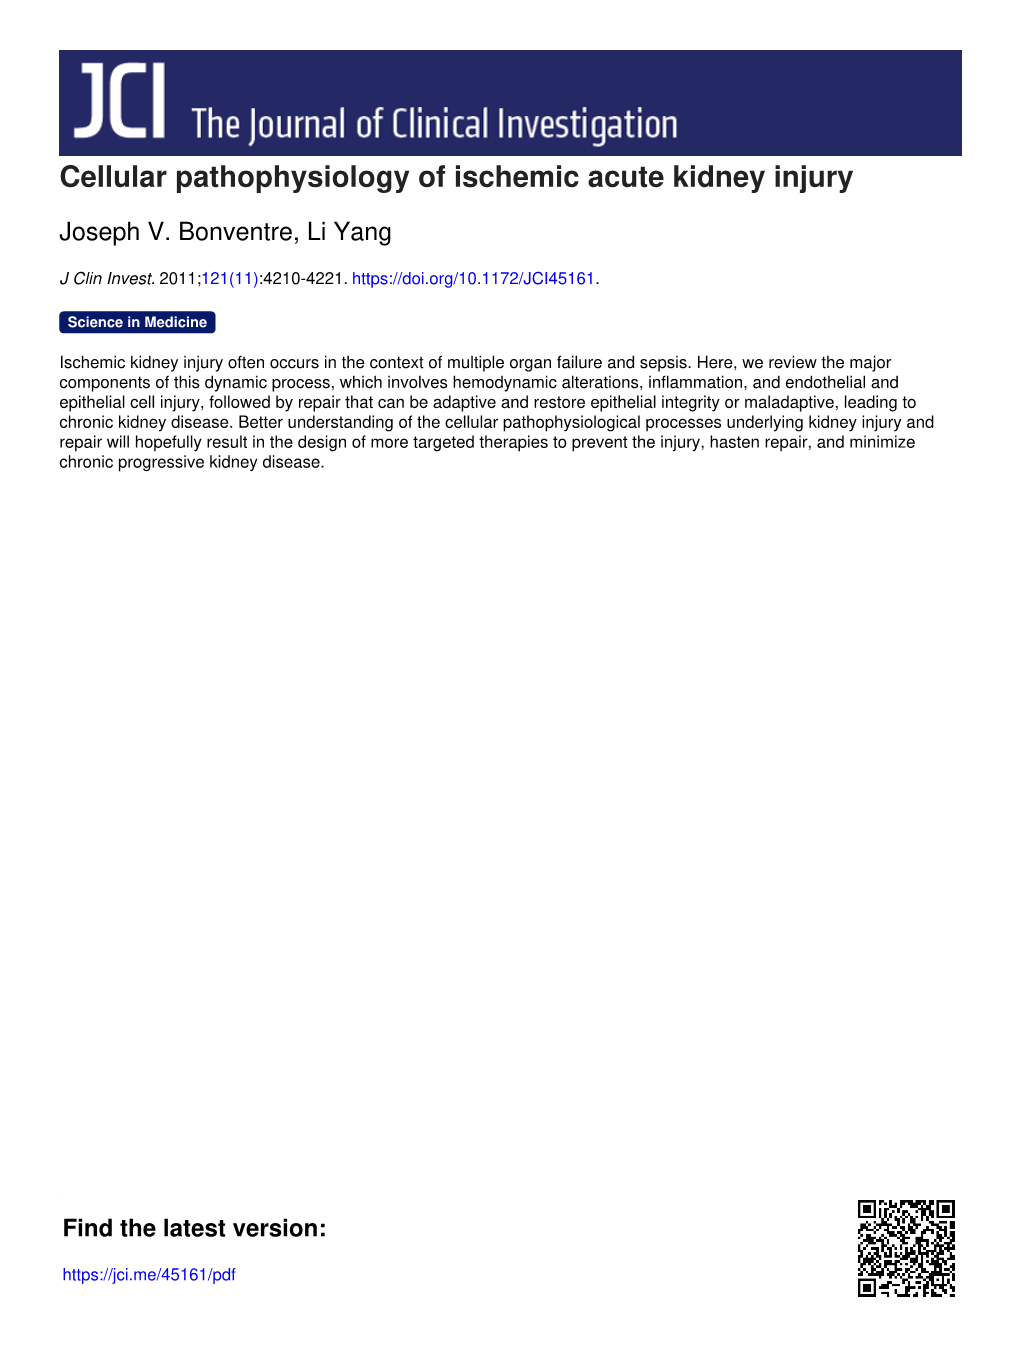 Cellular Pathophysiology of Ischemic Acute Kidney Injury